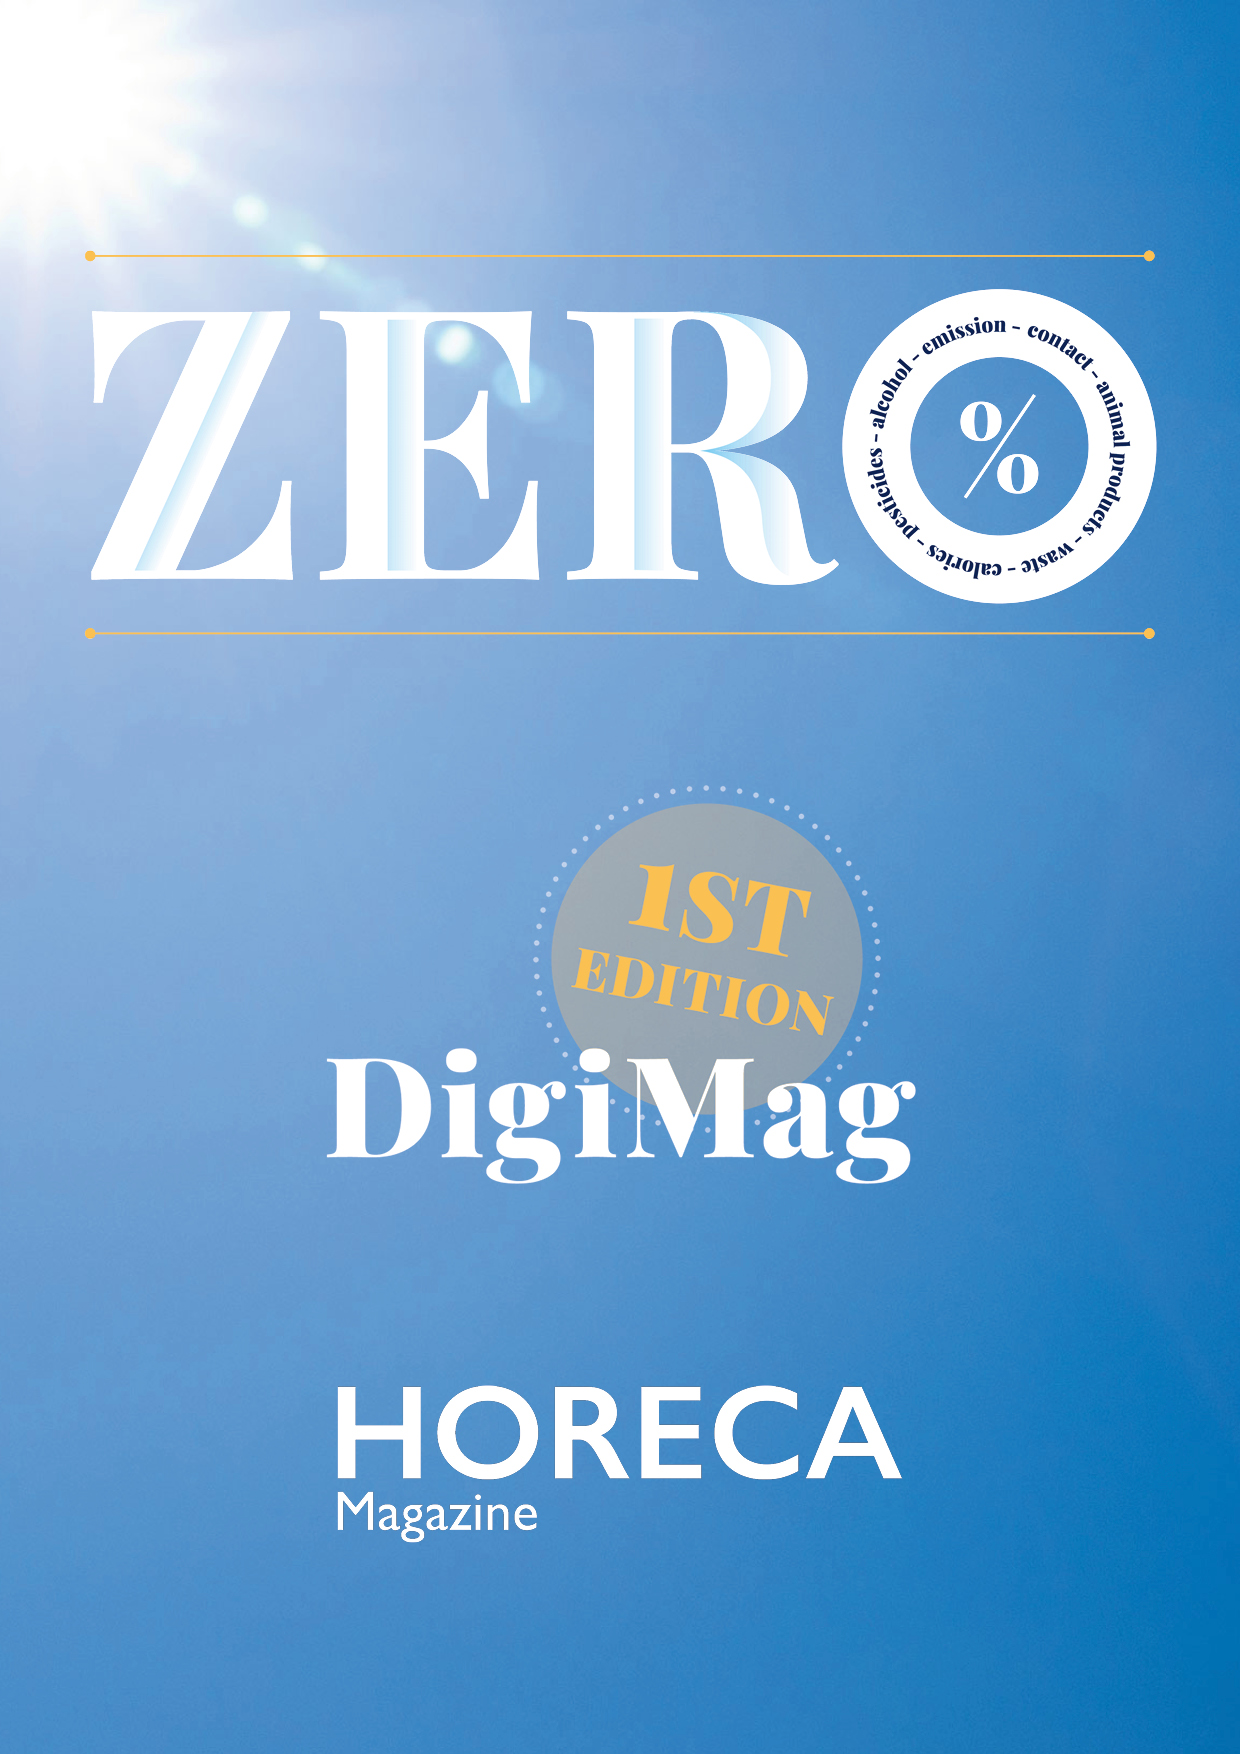 Horeca Magazine #204 Juillet 2020